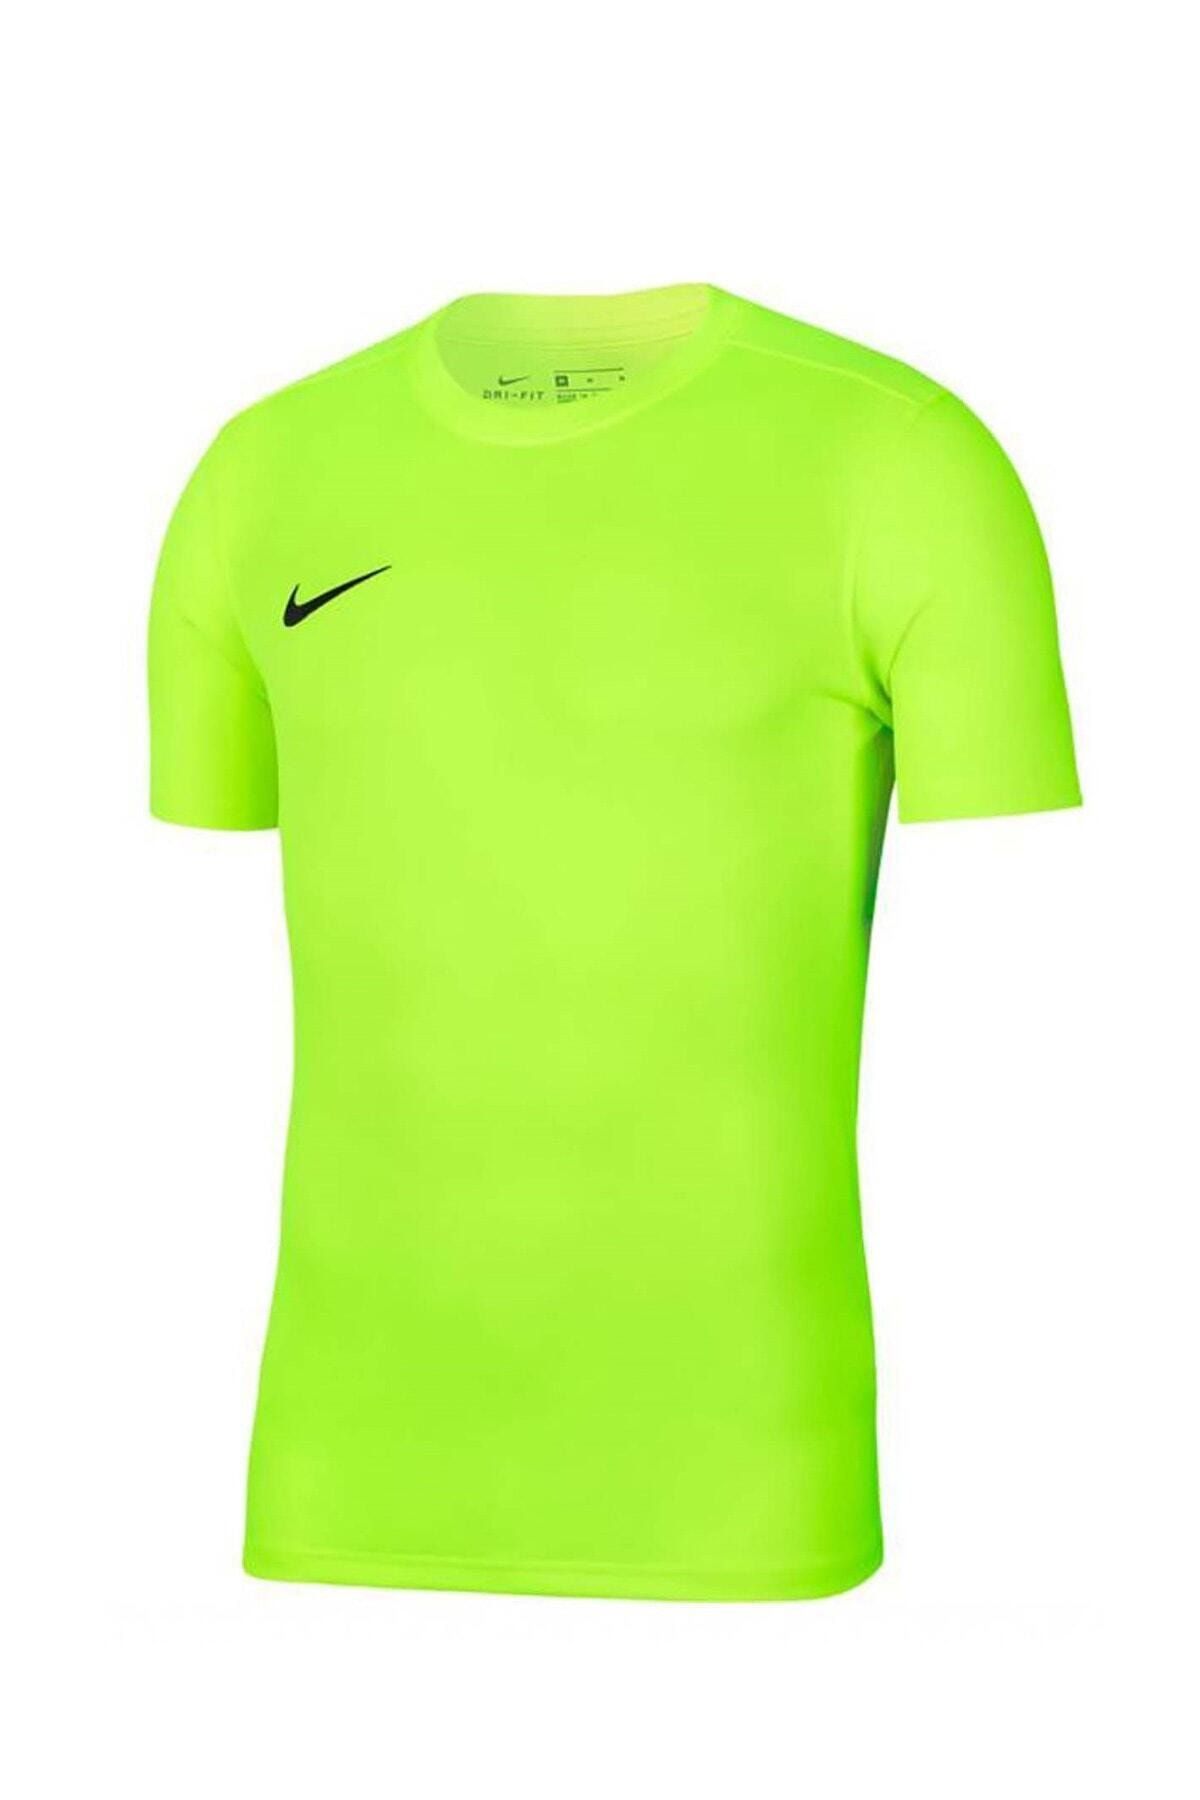 Nike M Nk Dry Park Vıı Jsy Ss Erkek Tişört Bv6708-702